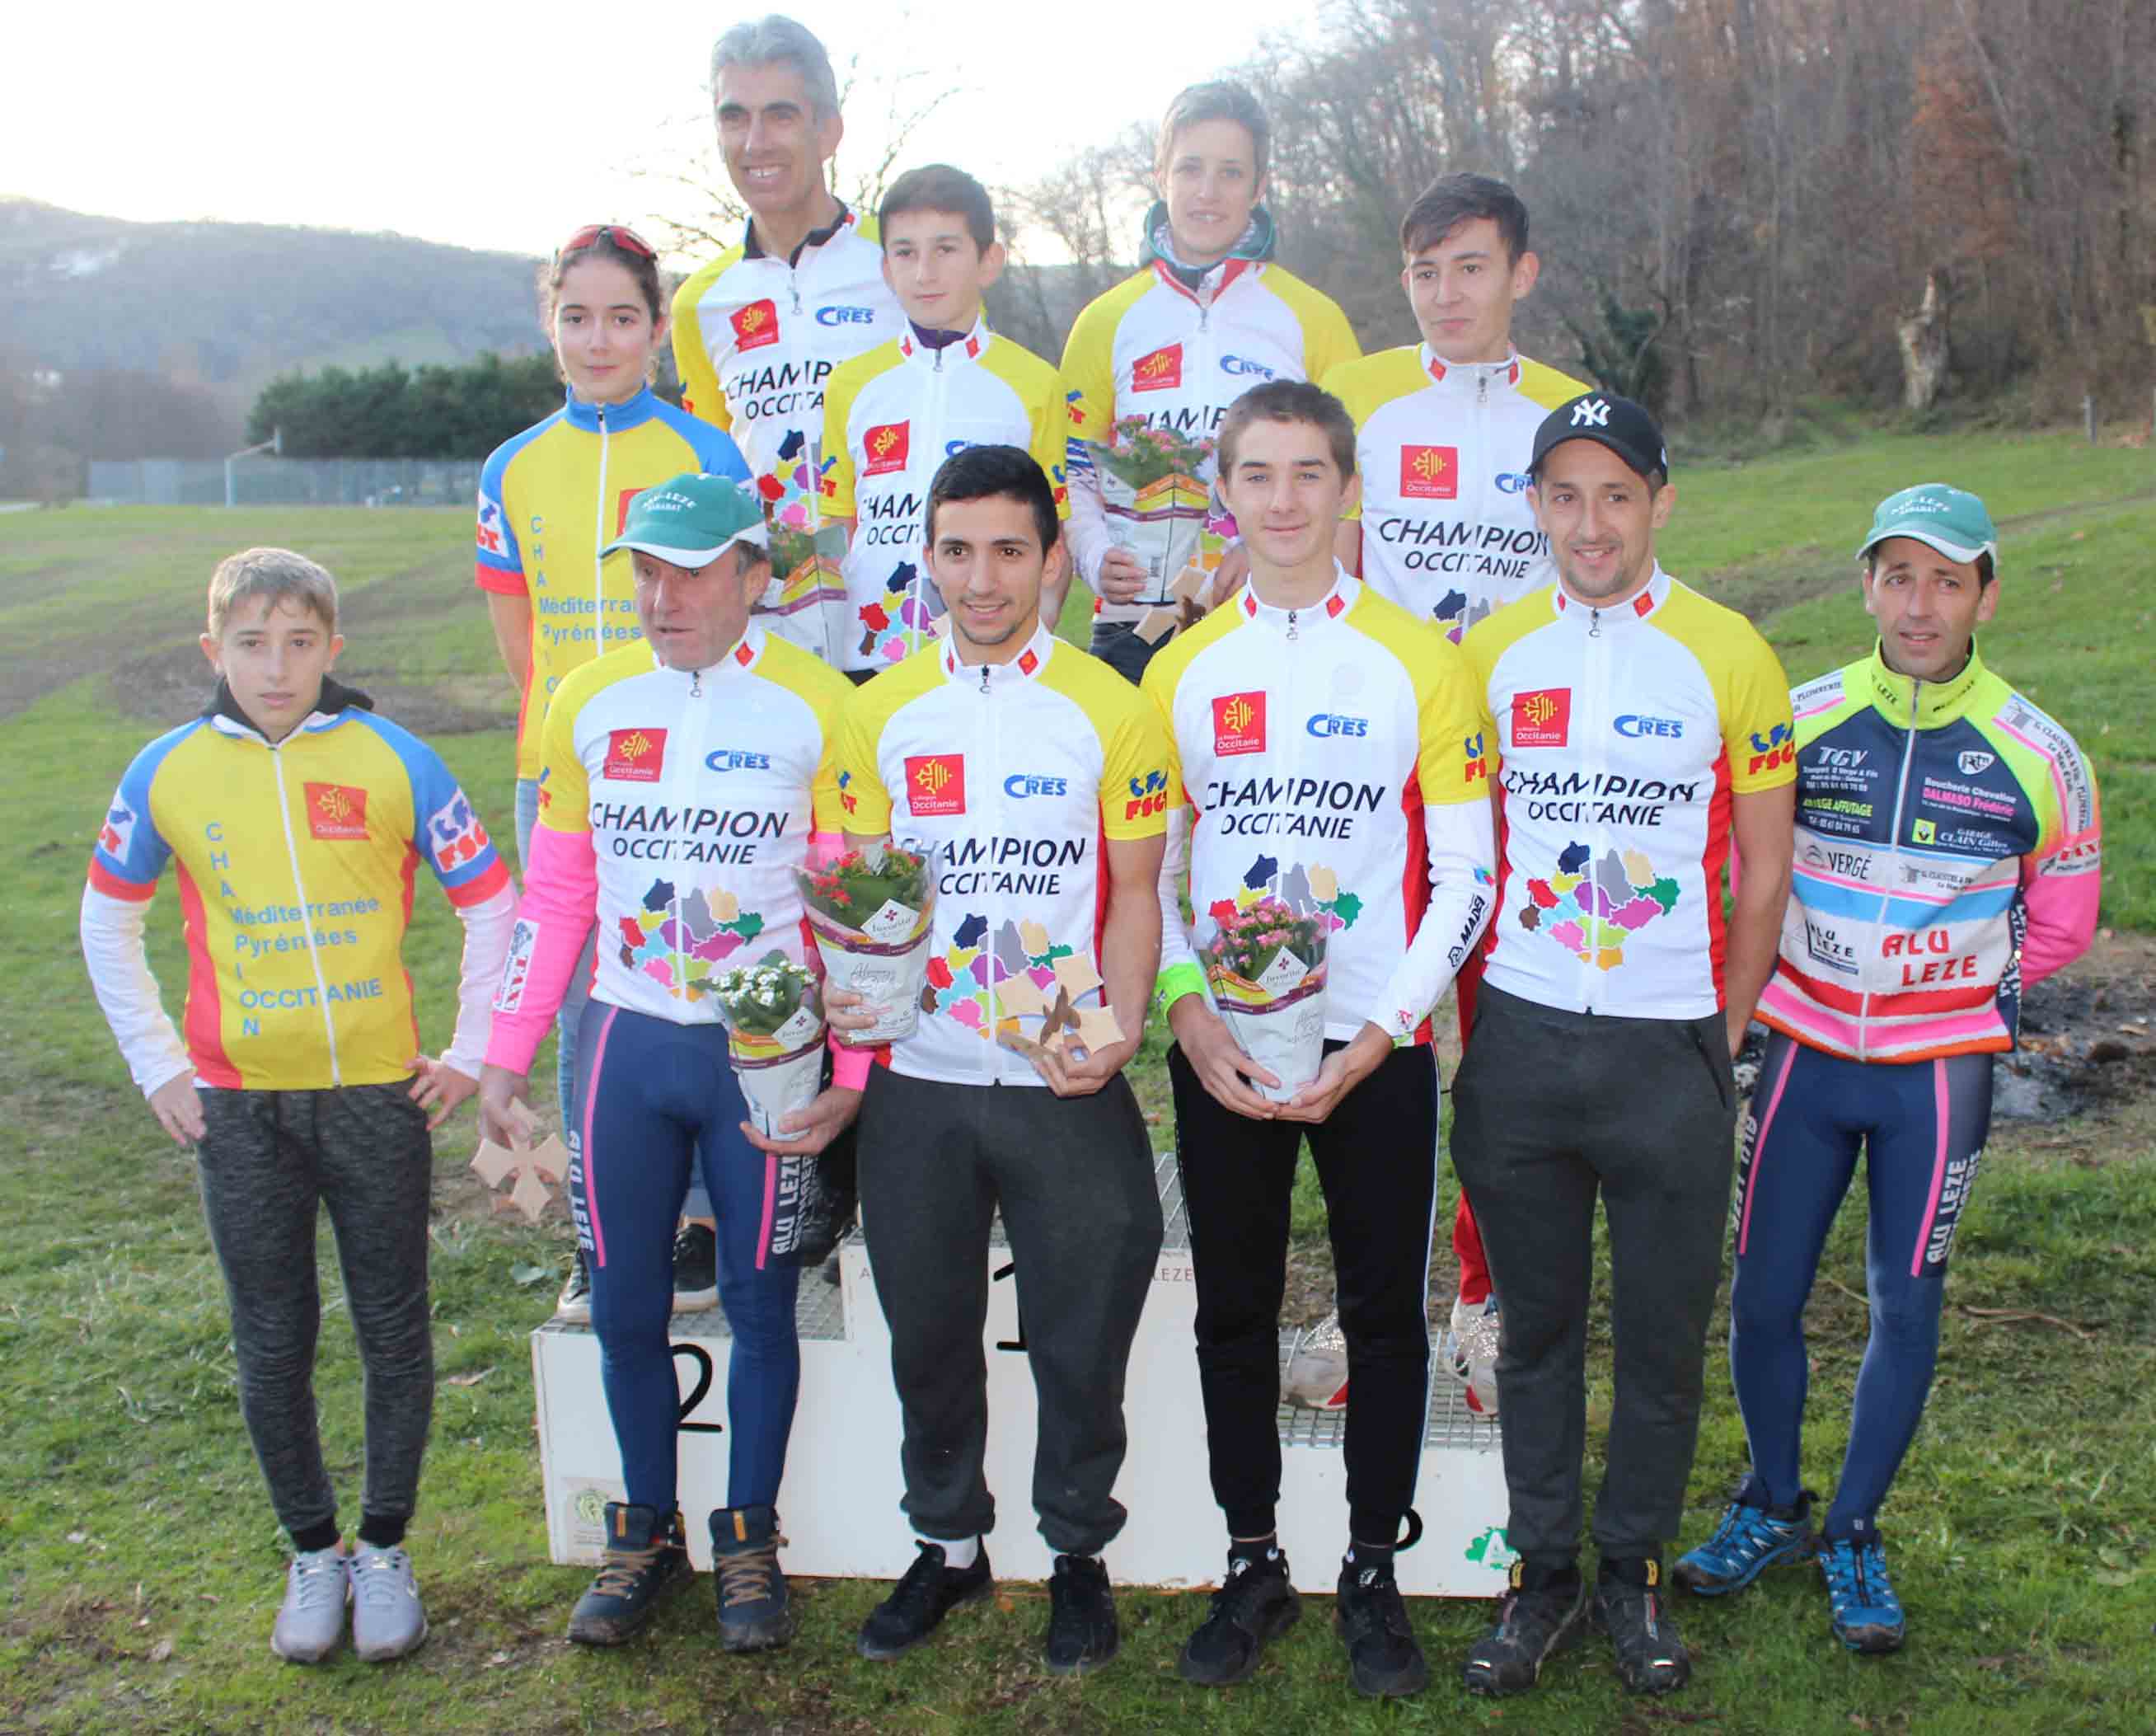 CC Champions Occitanie 2019